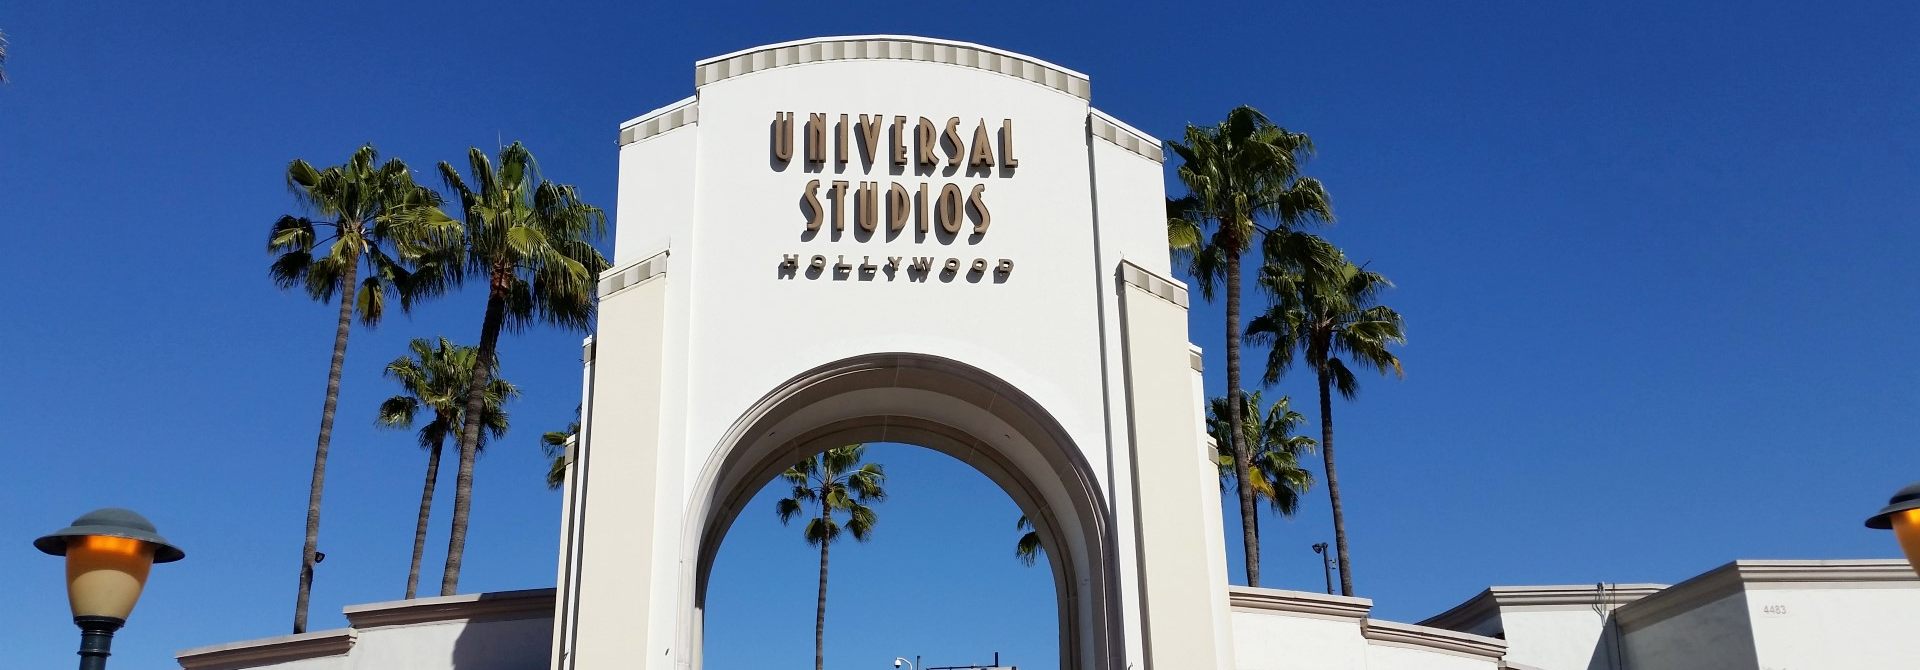 Universal Studios, Hollywood